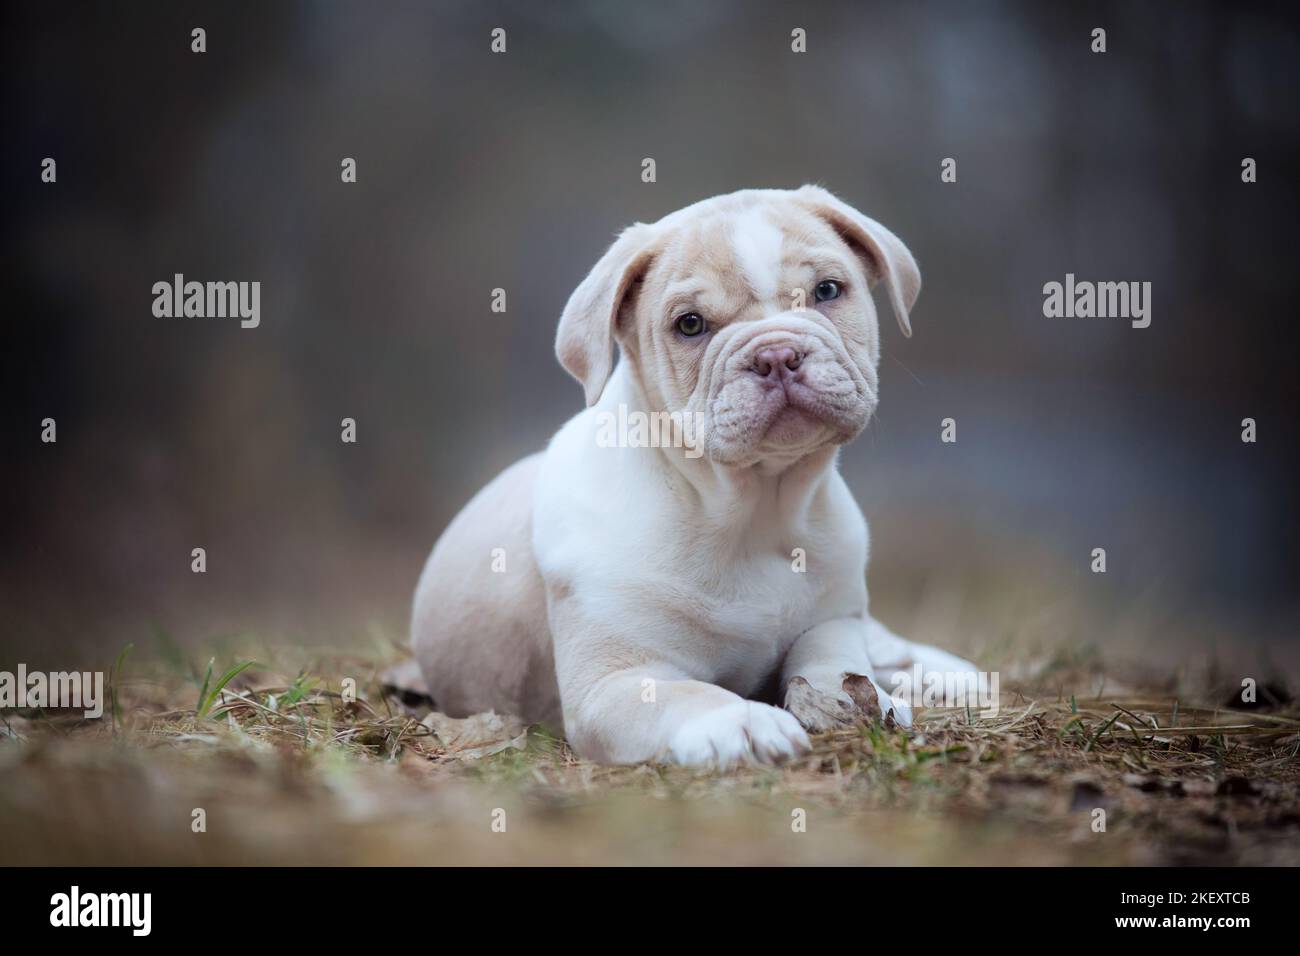 https://c8.alamy.com/comp/2KEXTCB/new-english-bulldog-puppy-2KEXTCB.jpg